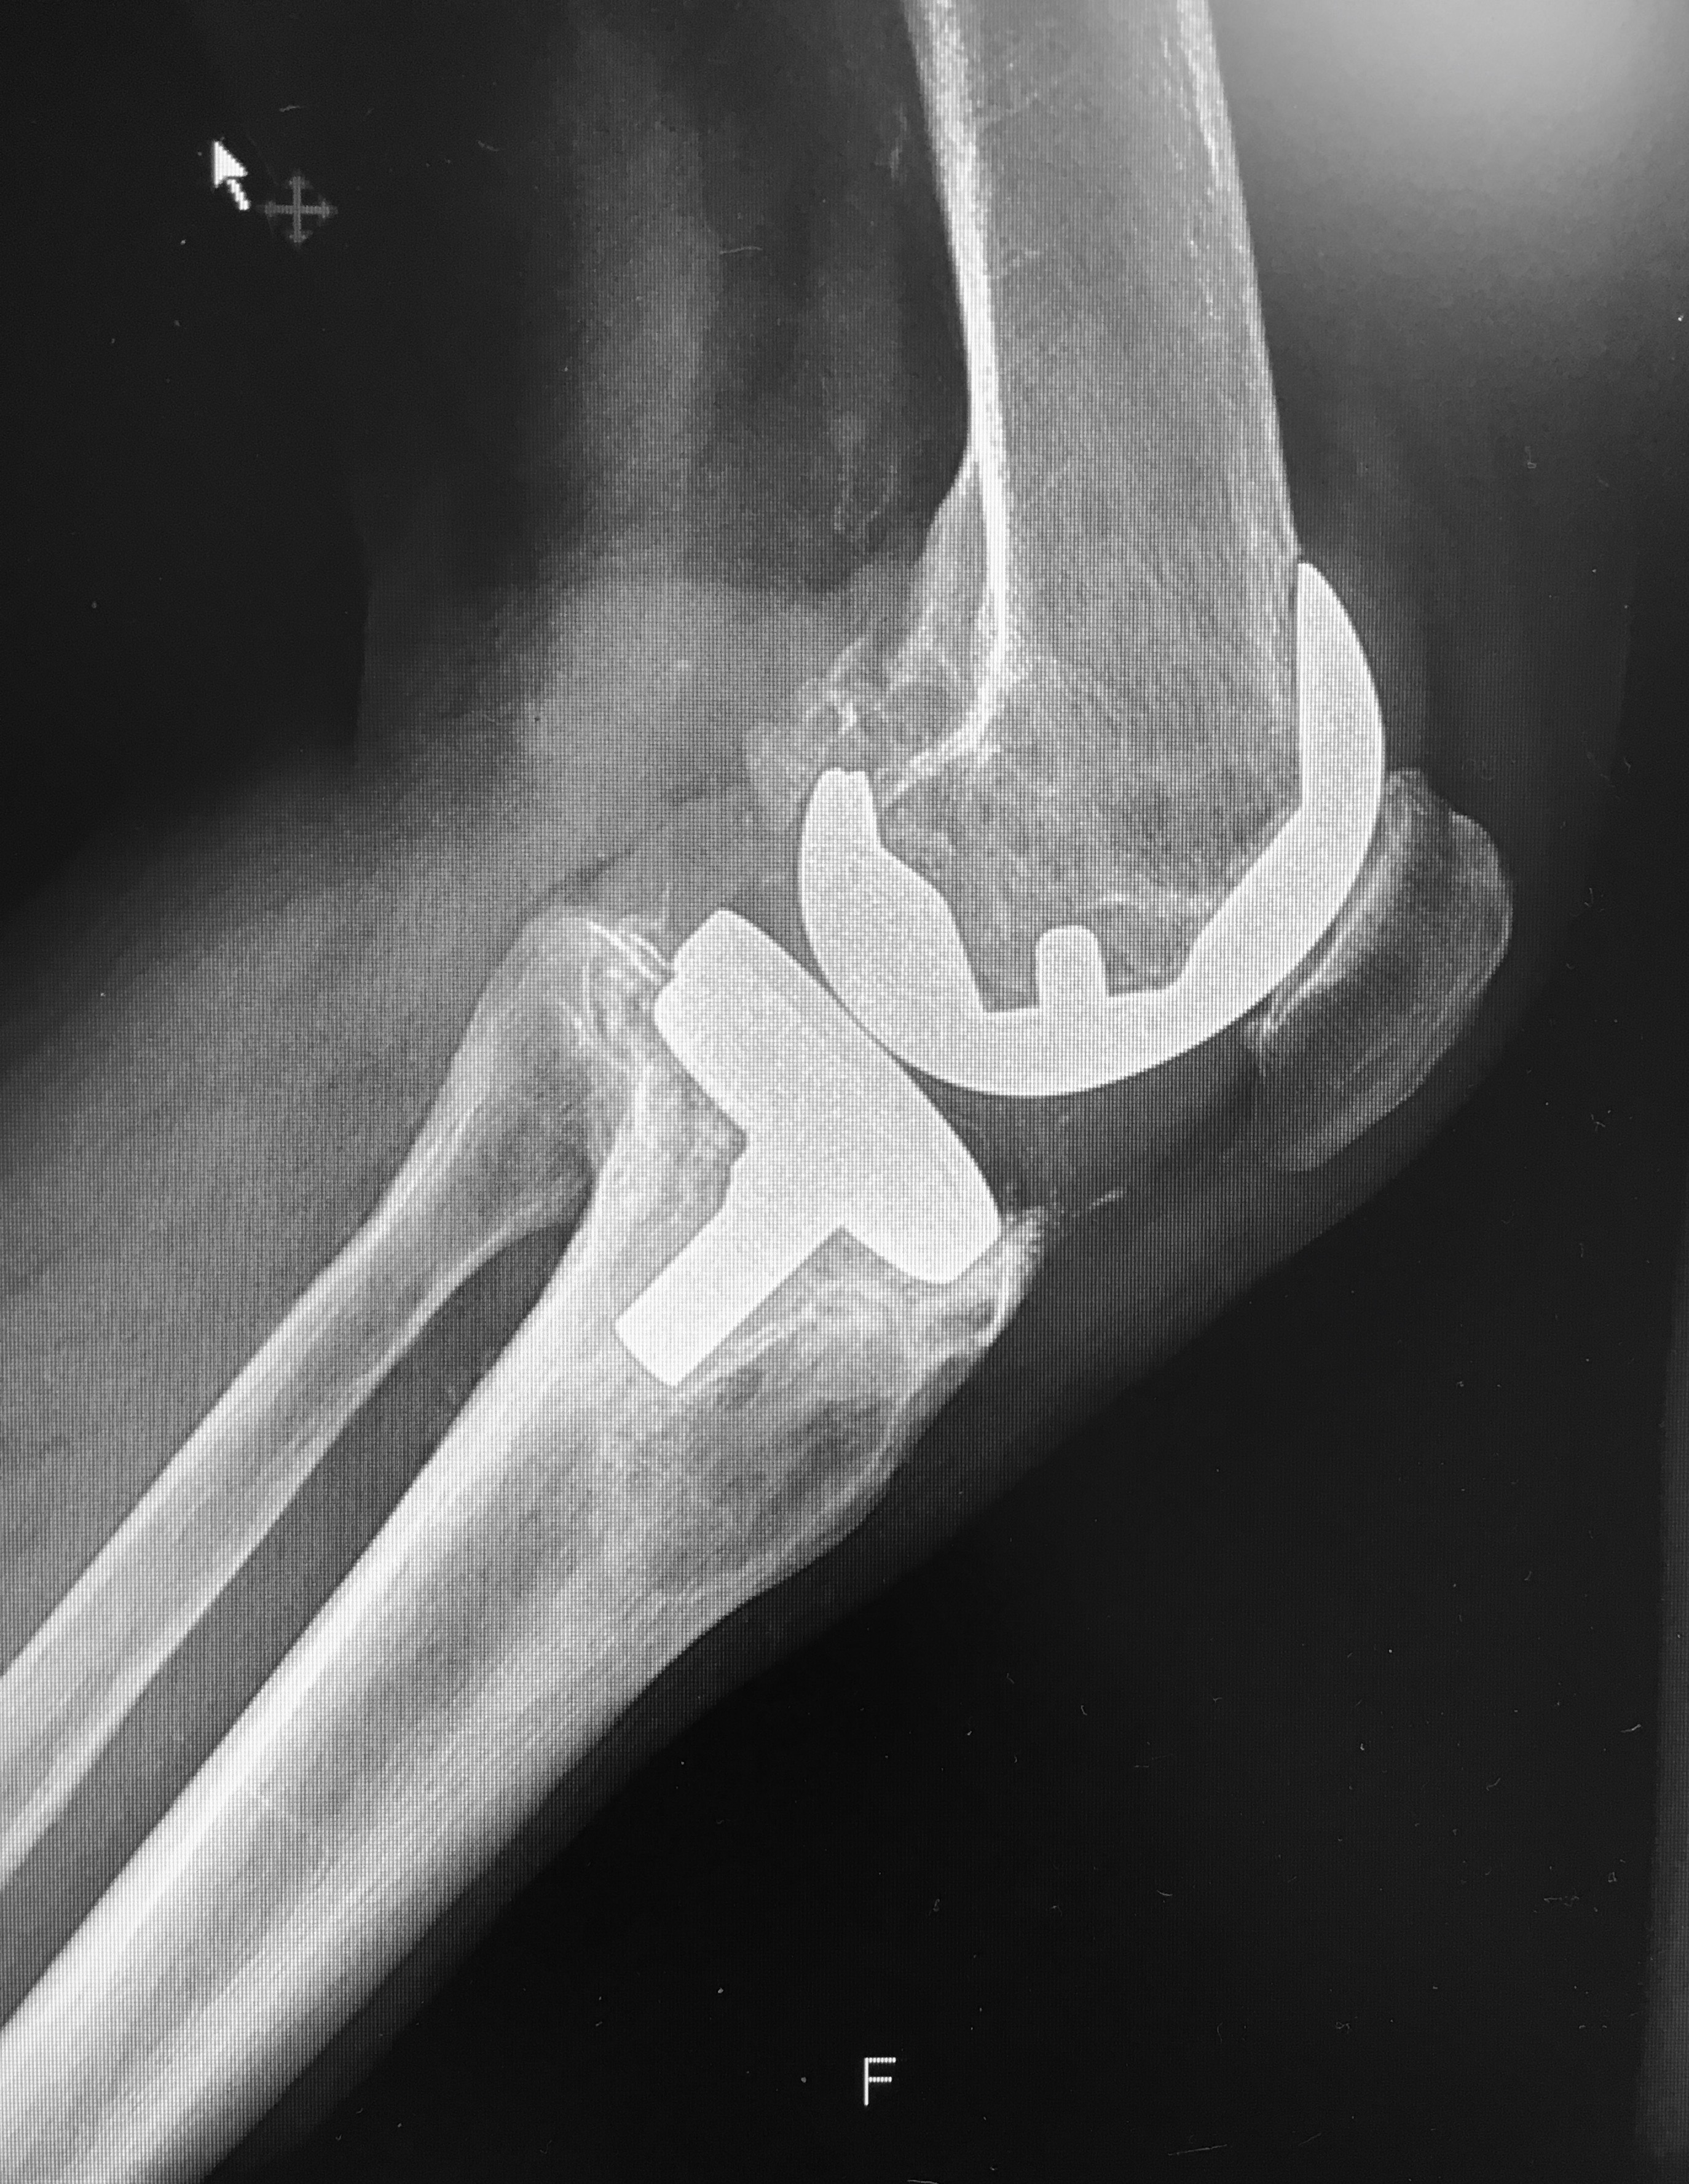 protesi totale ginocchio